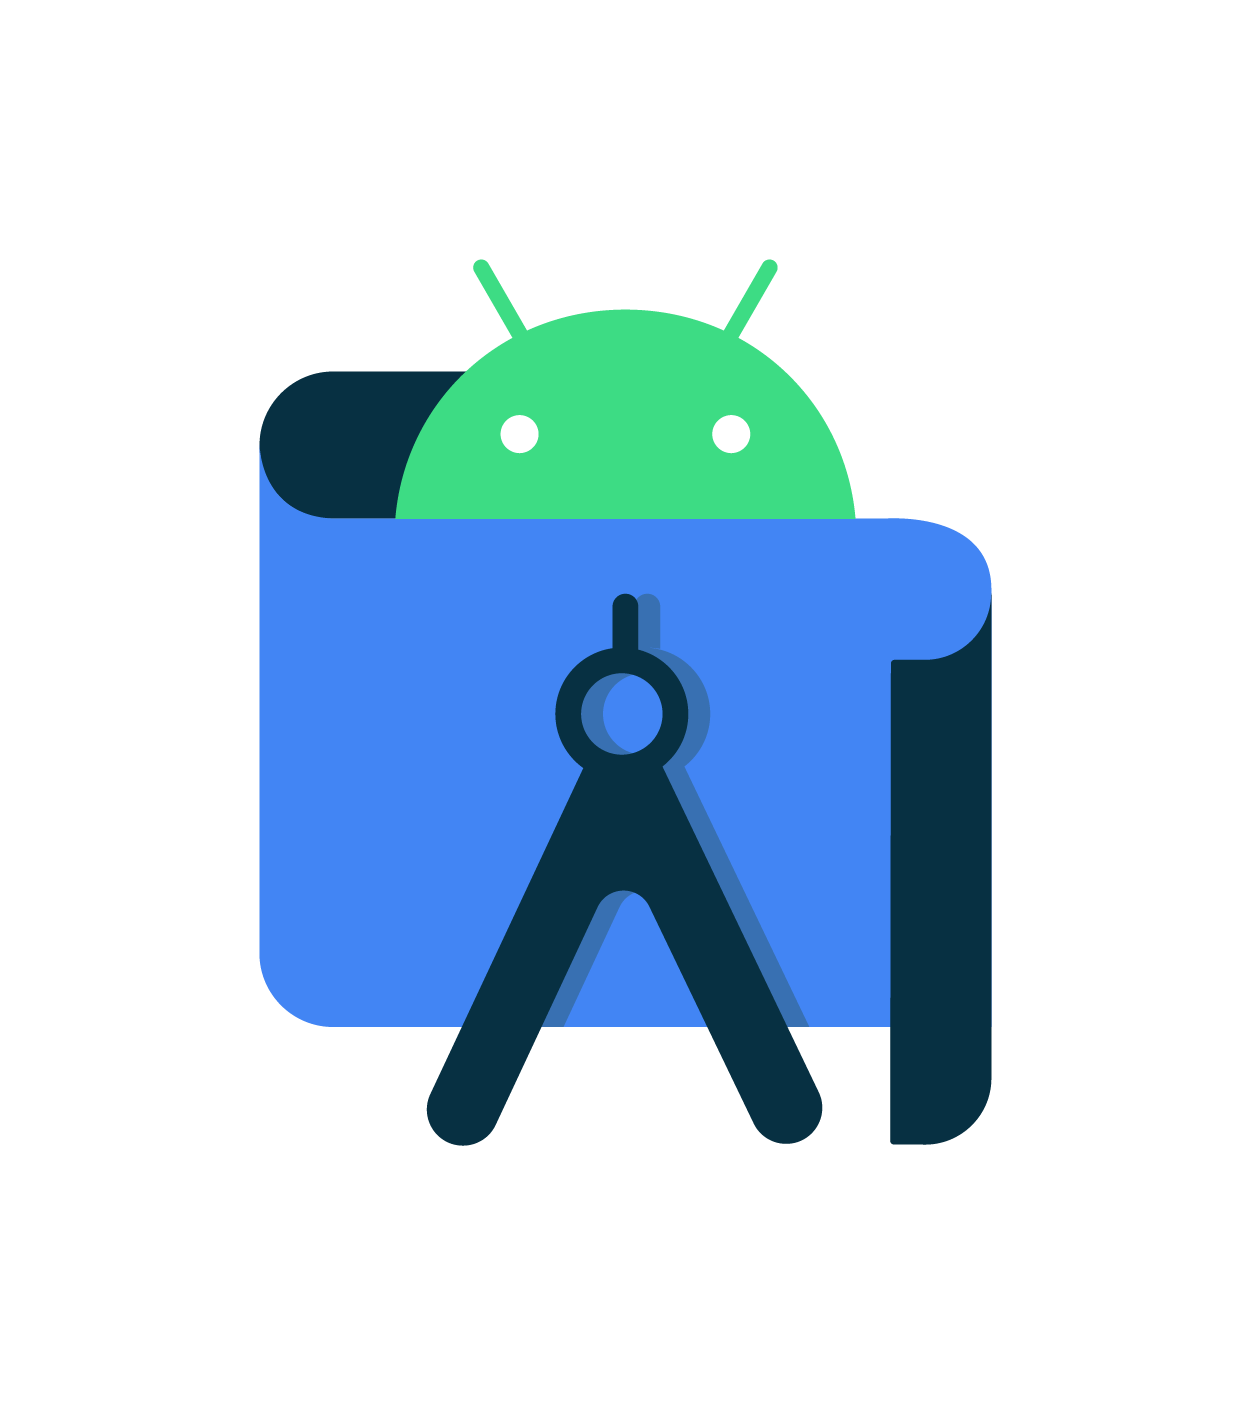 Download do APK de Hacker Simulator para Android